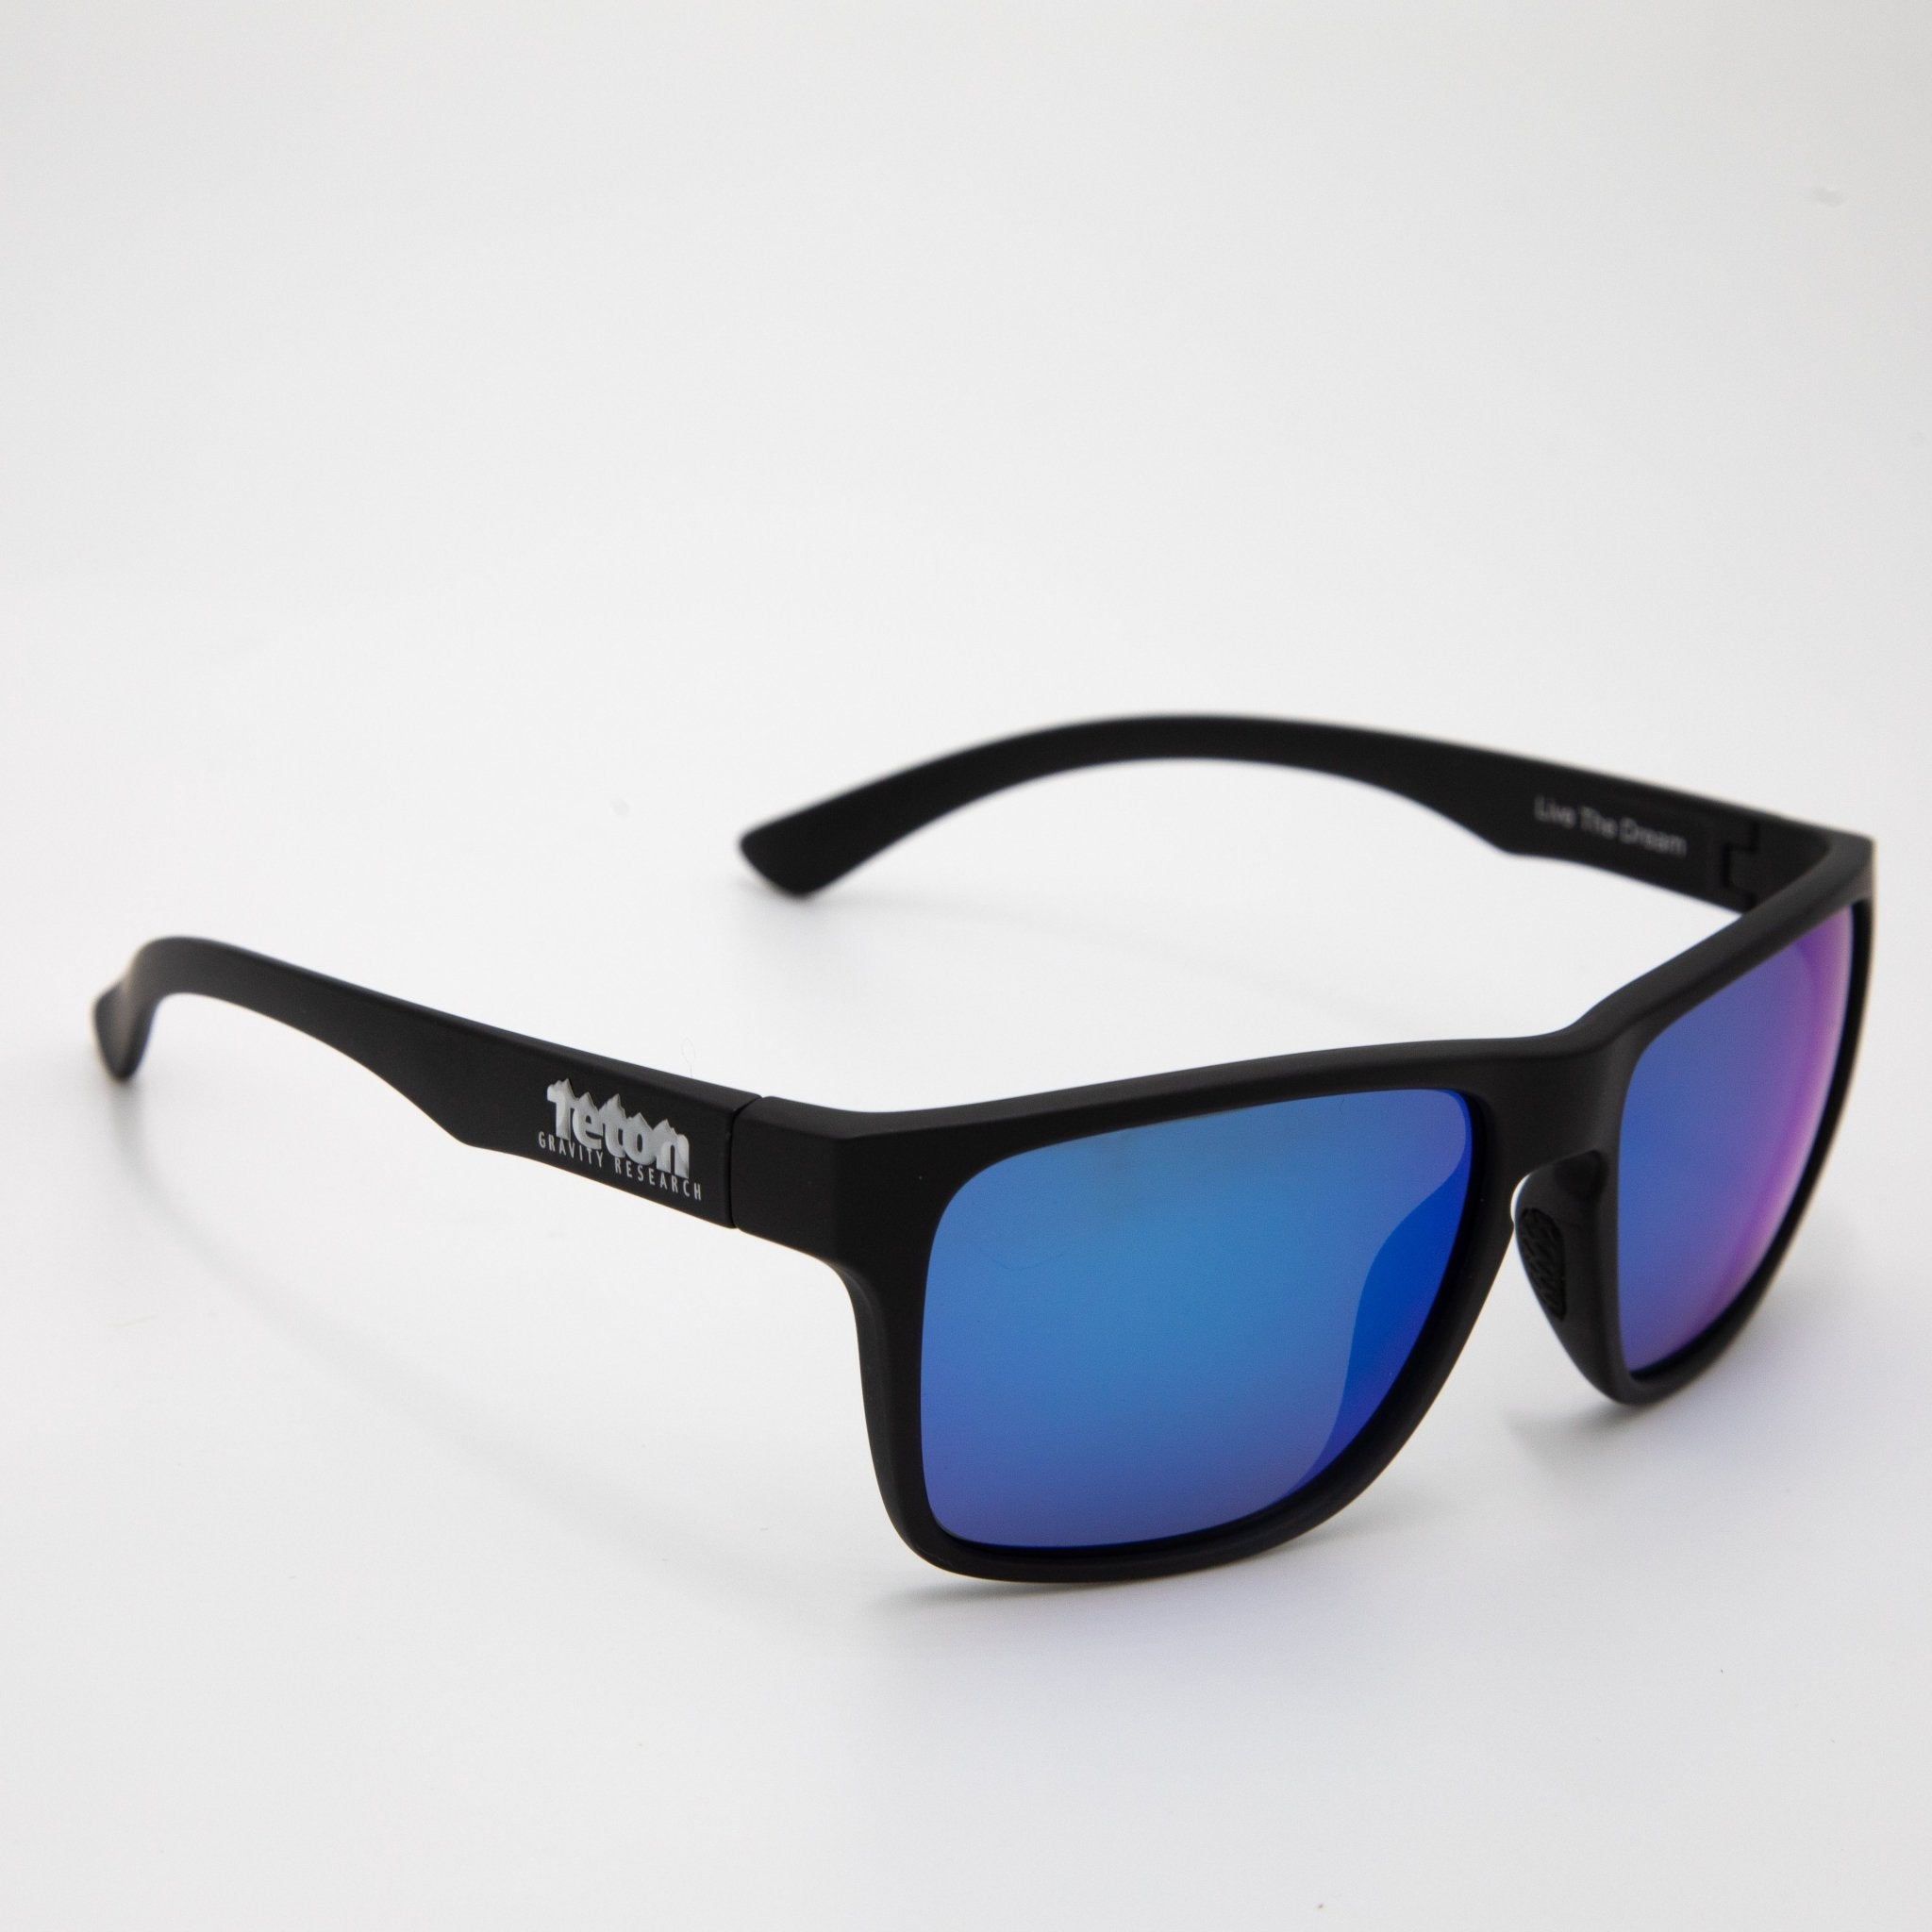 Sickbird Sunglasses - Teton Gravity Research